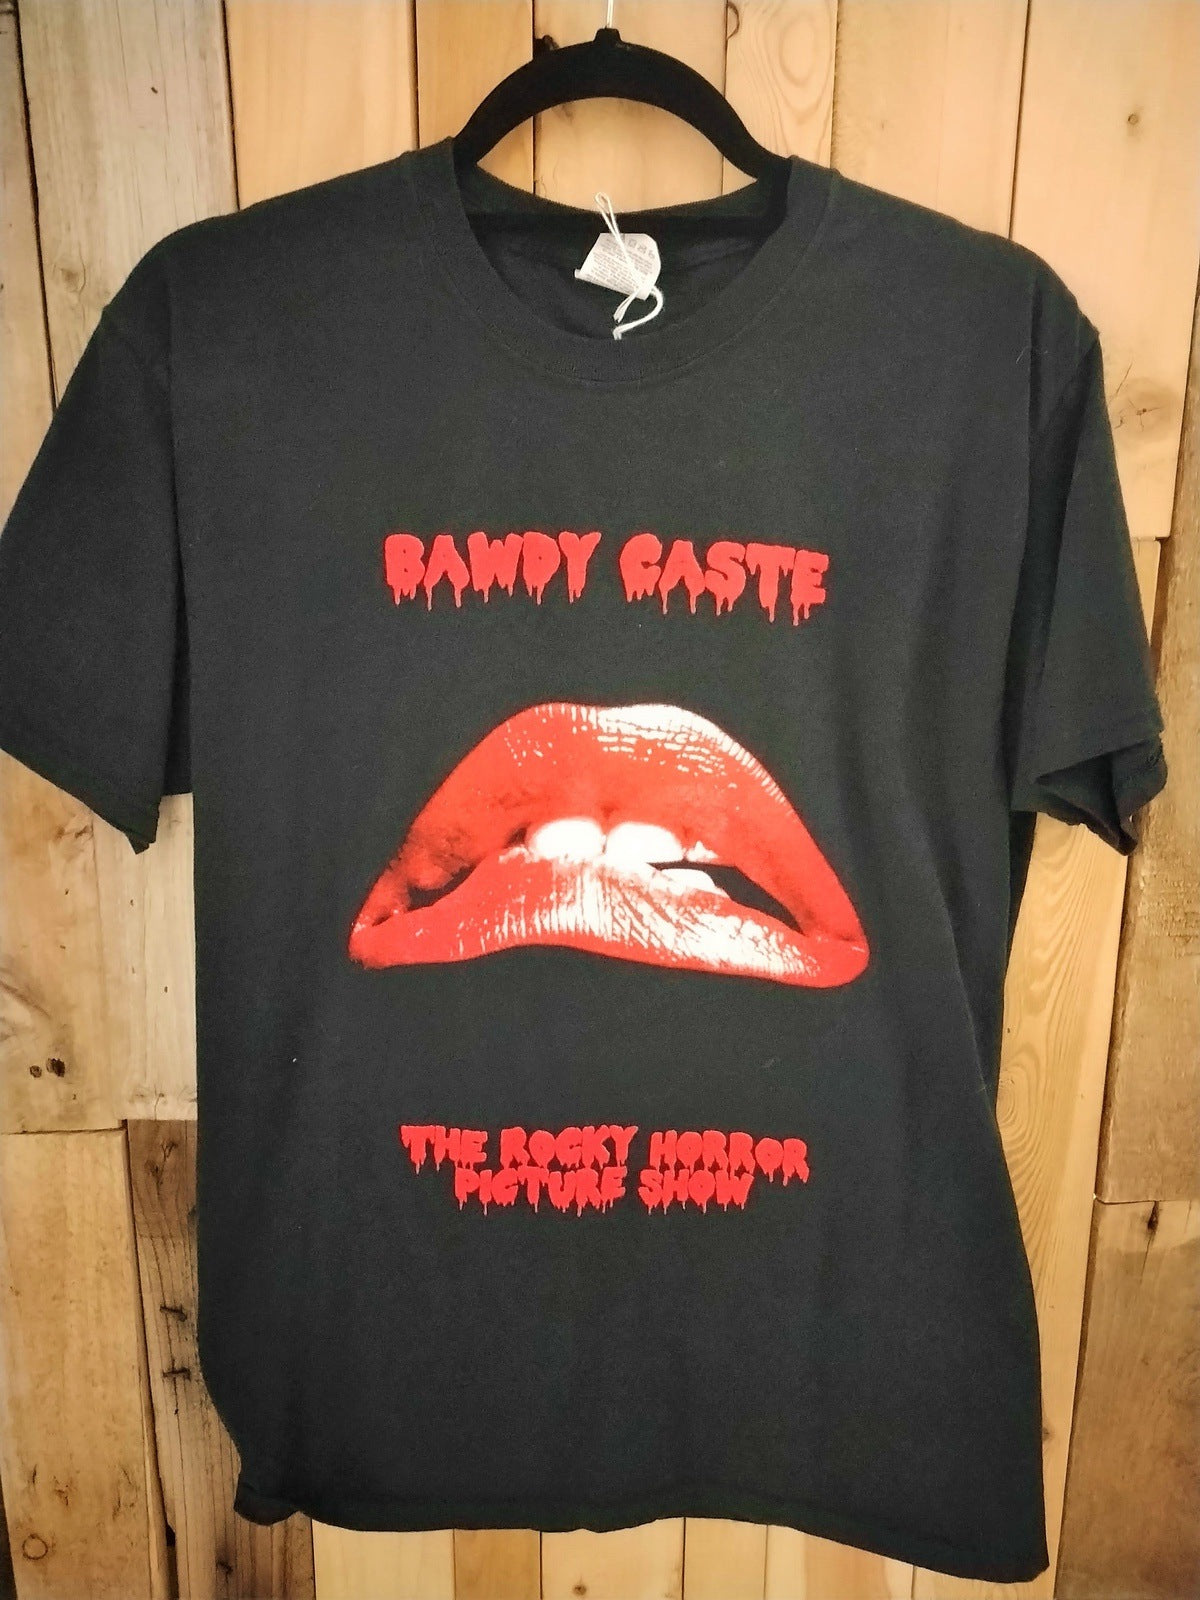 Rocky Horror Picture Show "Bawdy Caste" T Shirt Size Medium